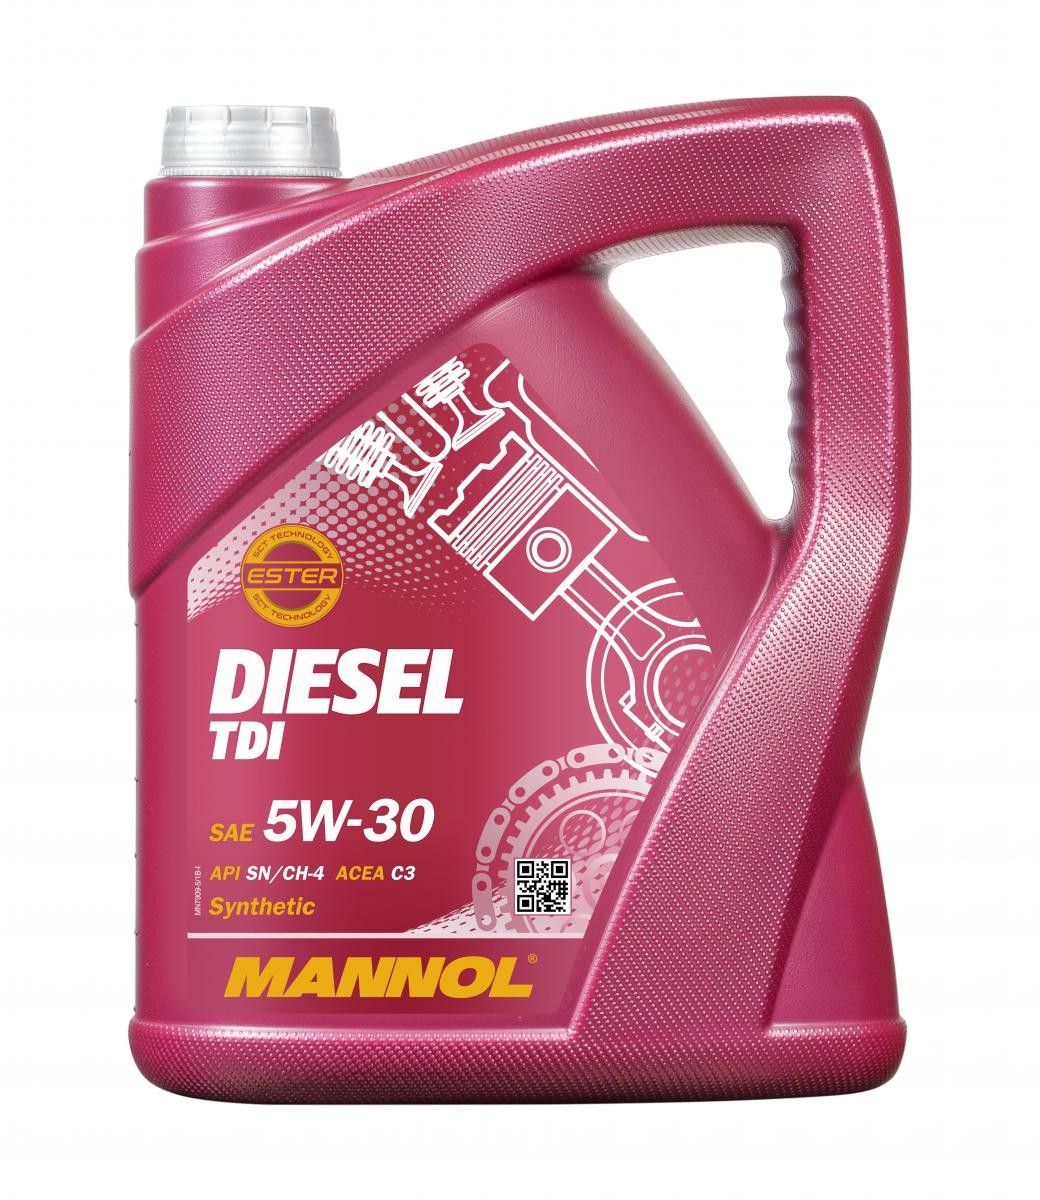 MANNOL DIESEL TDI MN7909-5 Engine oil 5W-30, 5l, Synthetic Oil